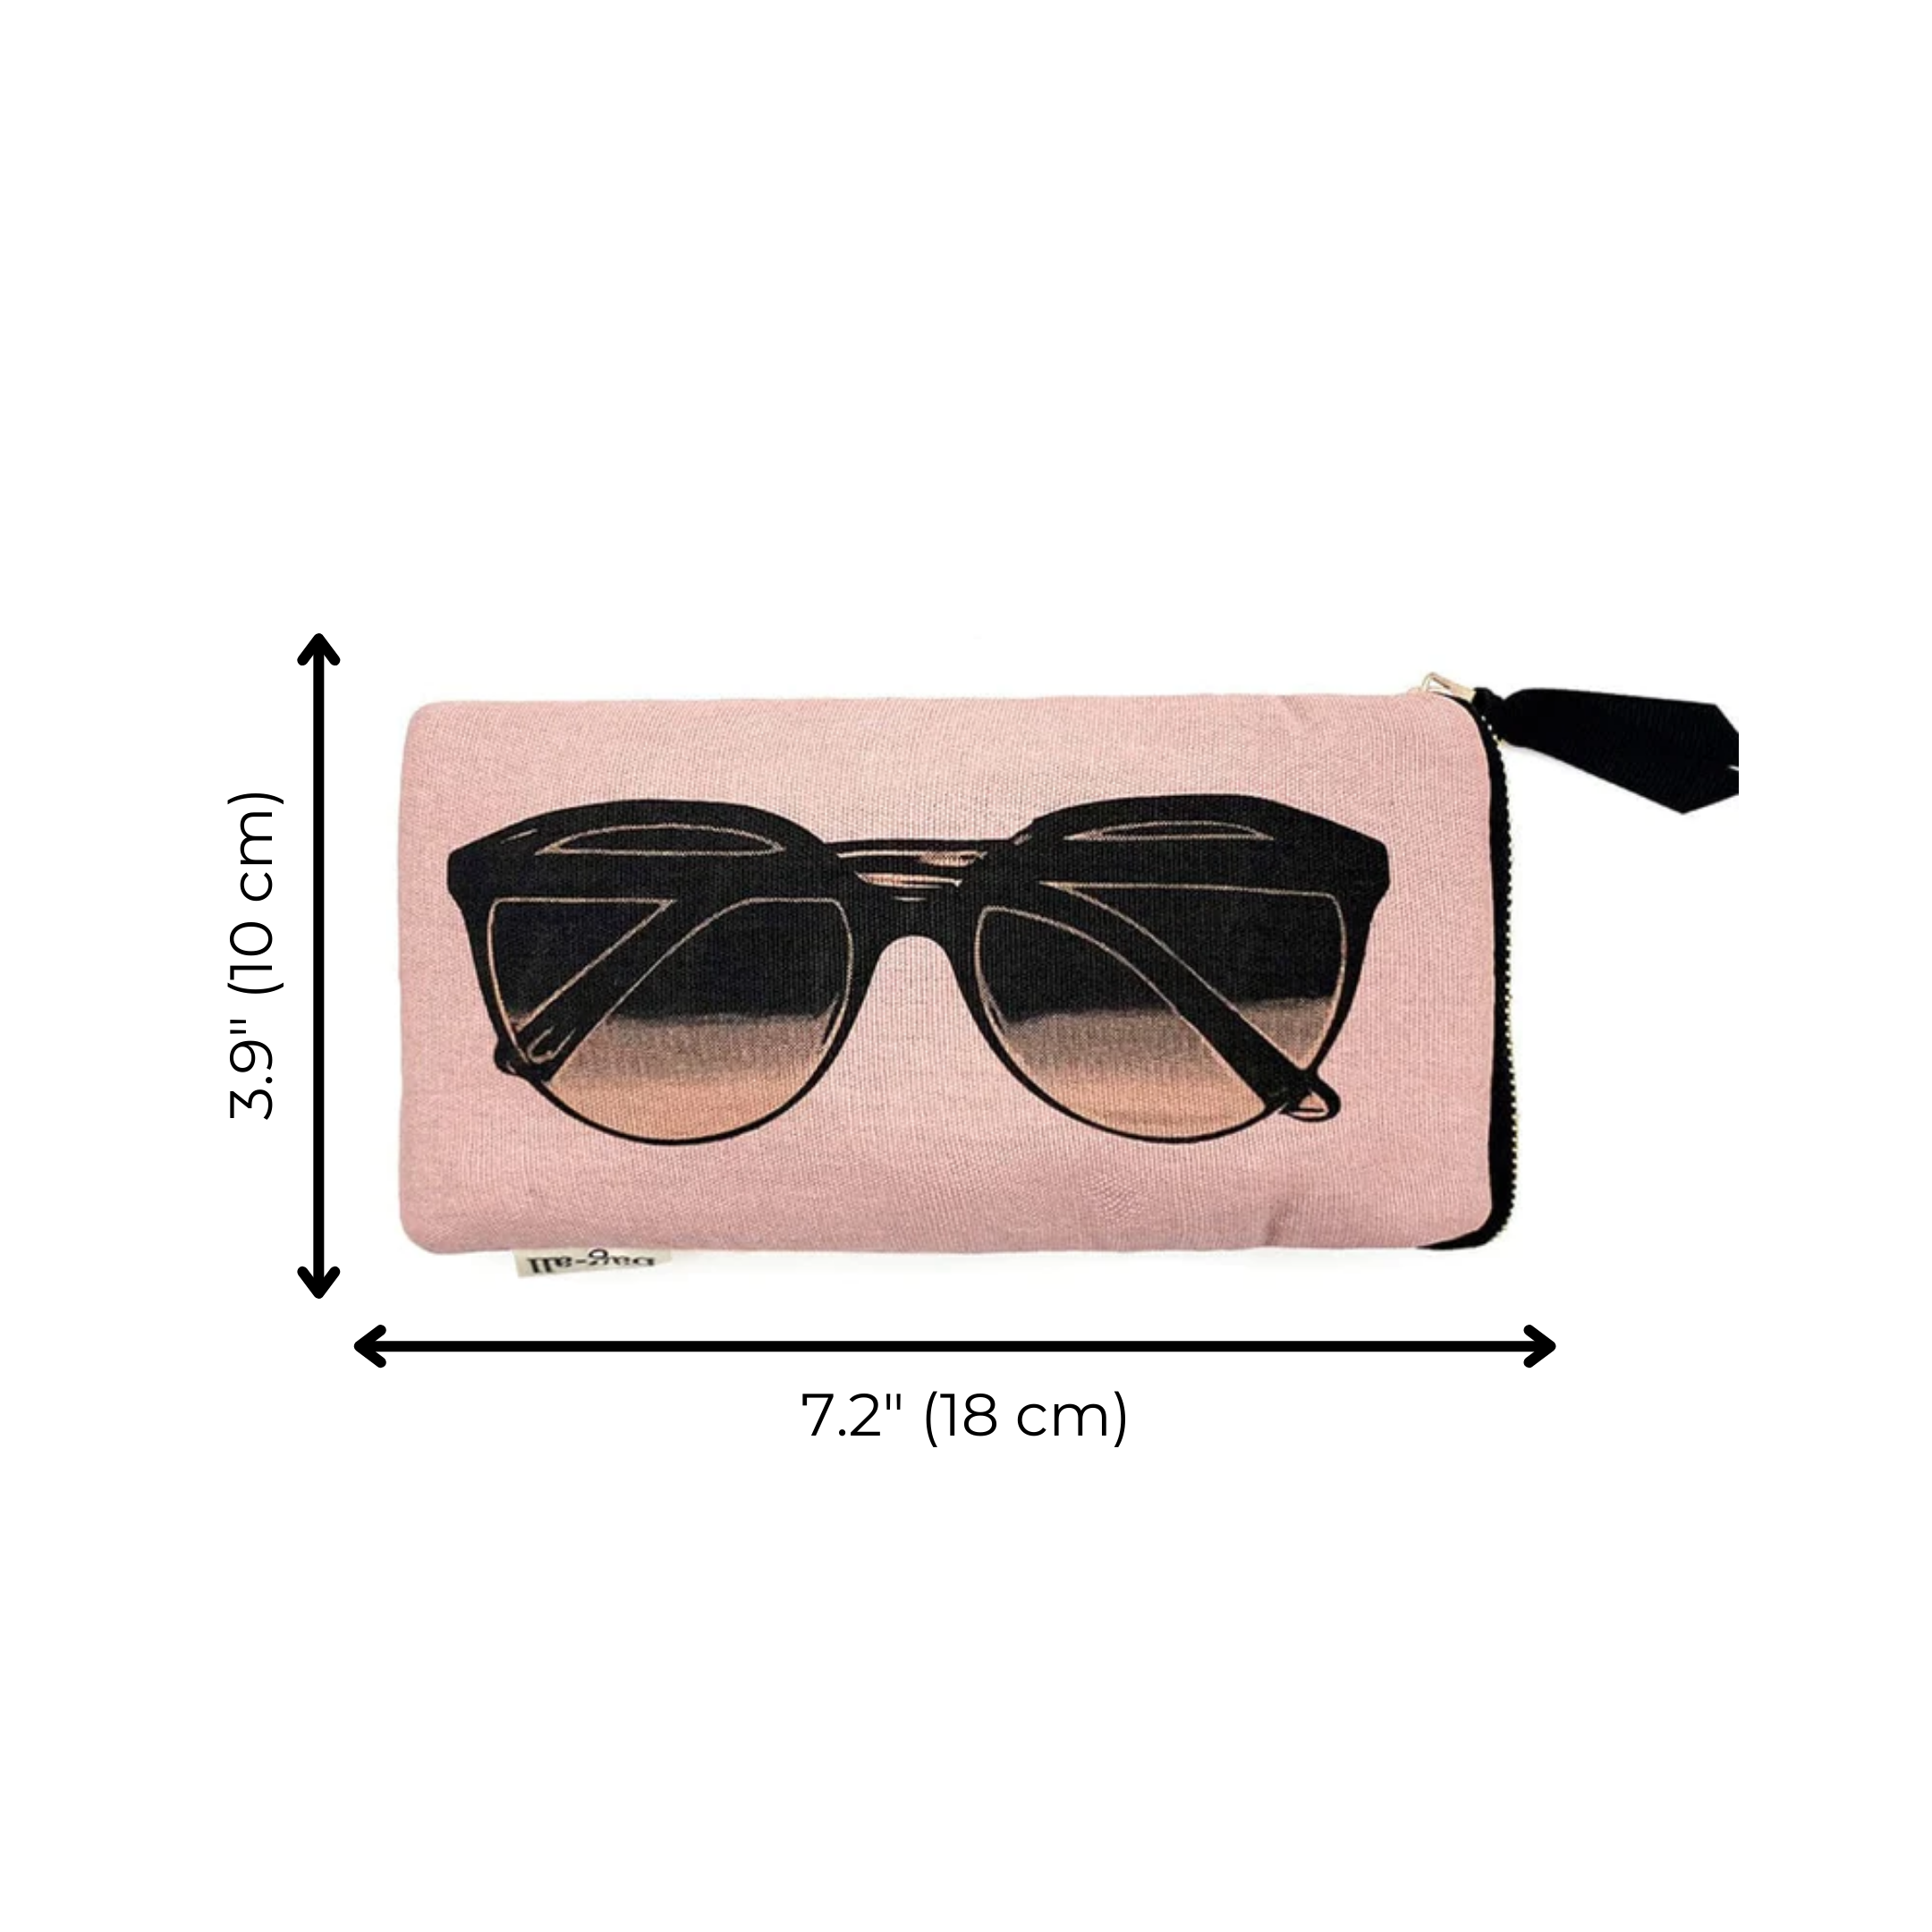 Glasses Case with Outside Pocket, Pink/Blush | Bag-all